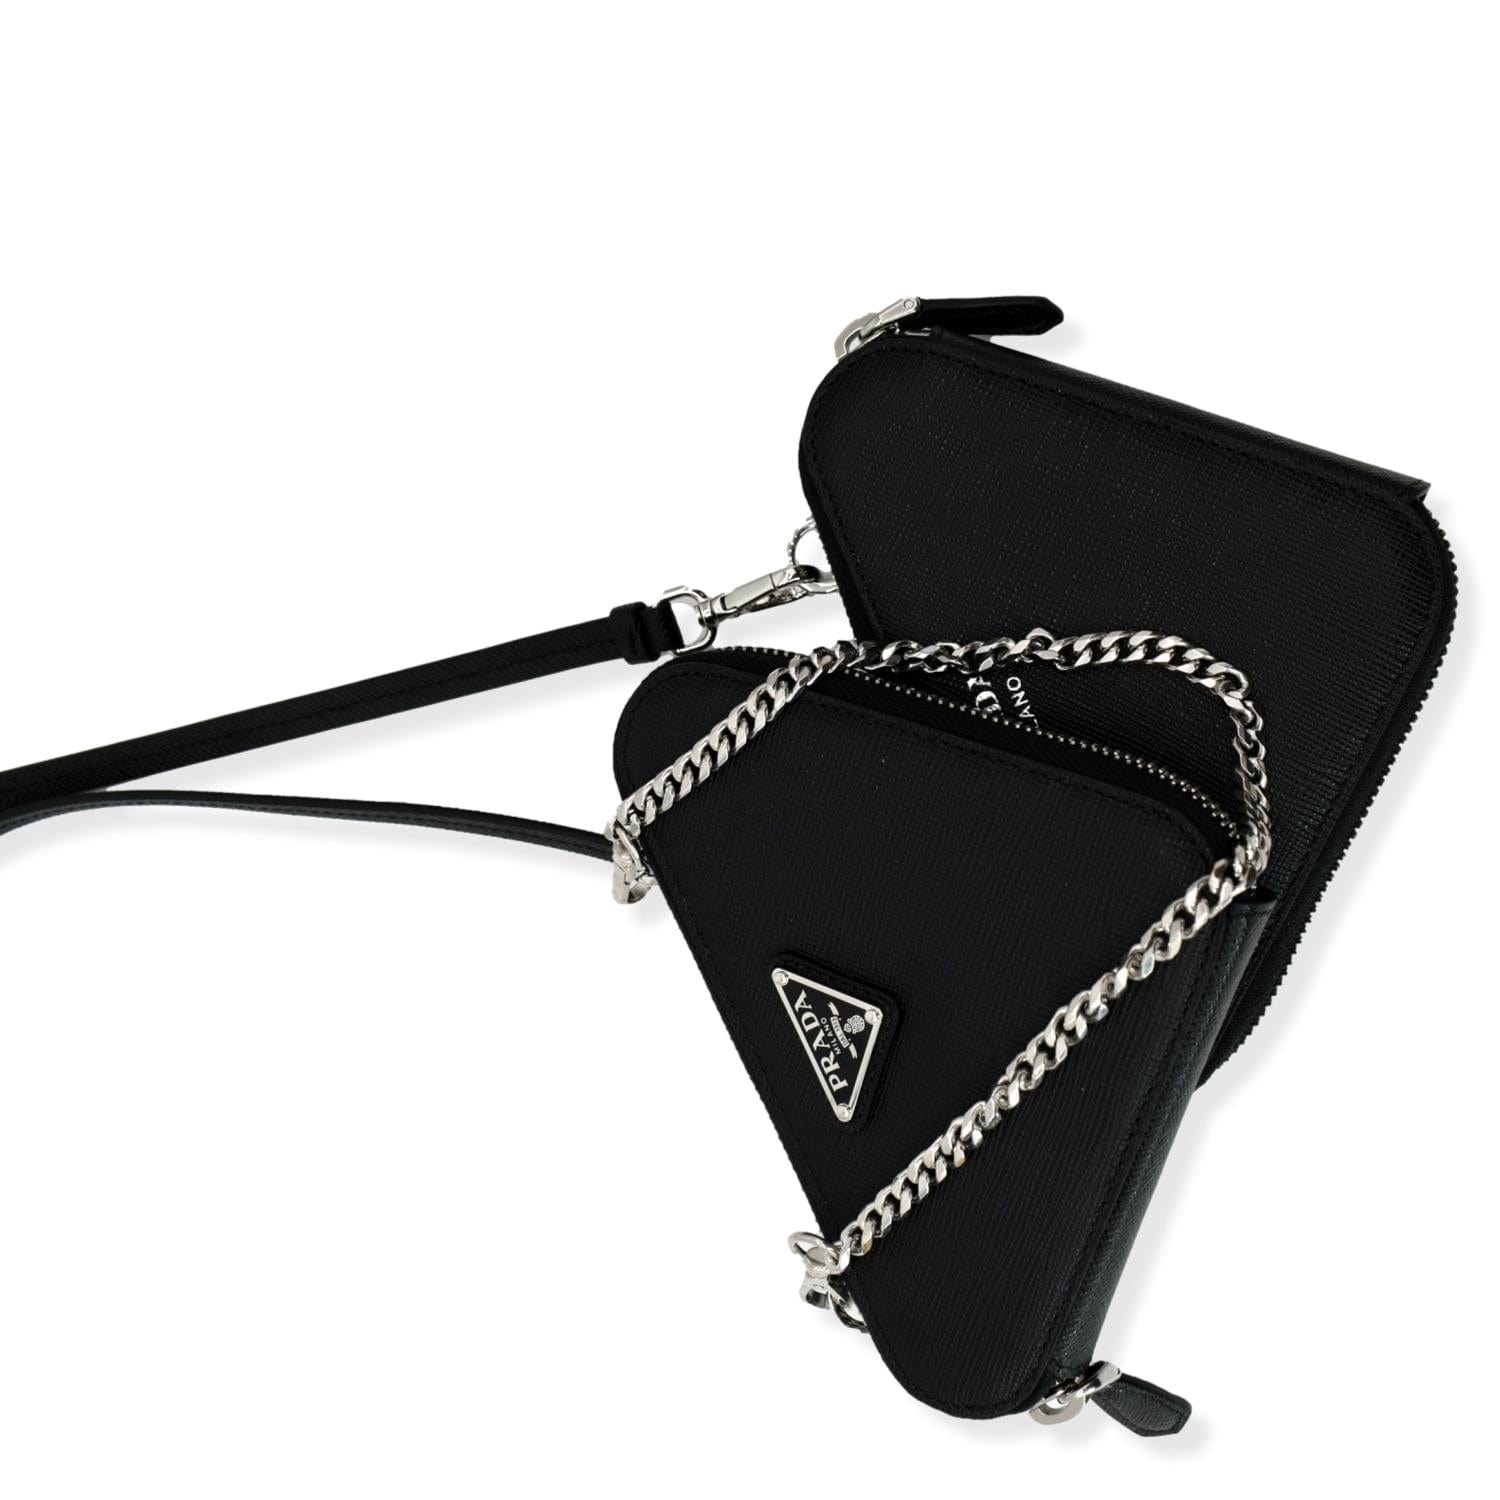 PRADA Mini Saffiano Leather Pouch Crossbody Bag Black